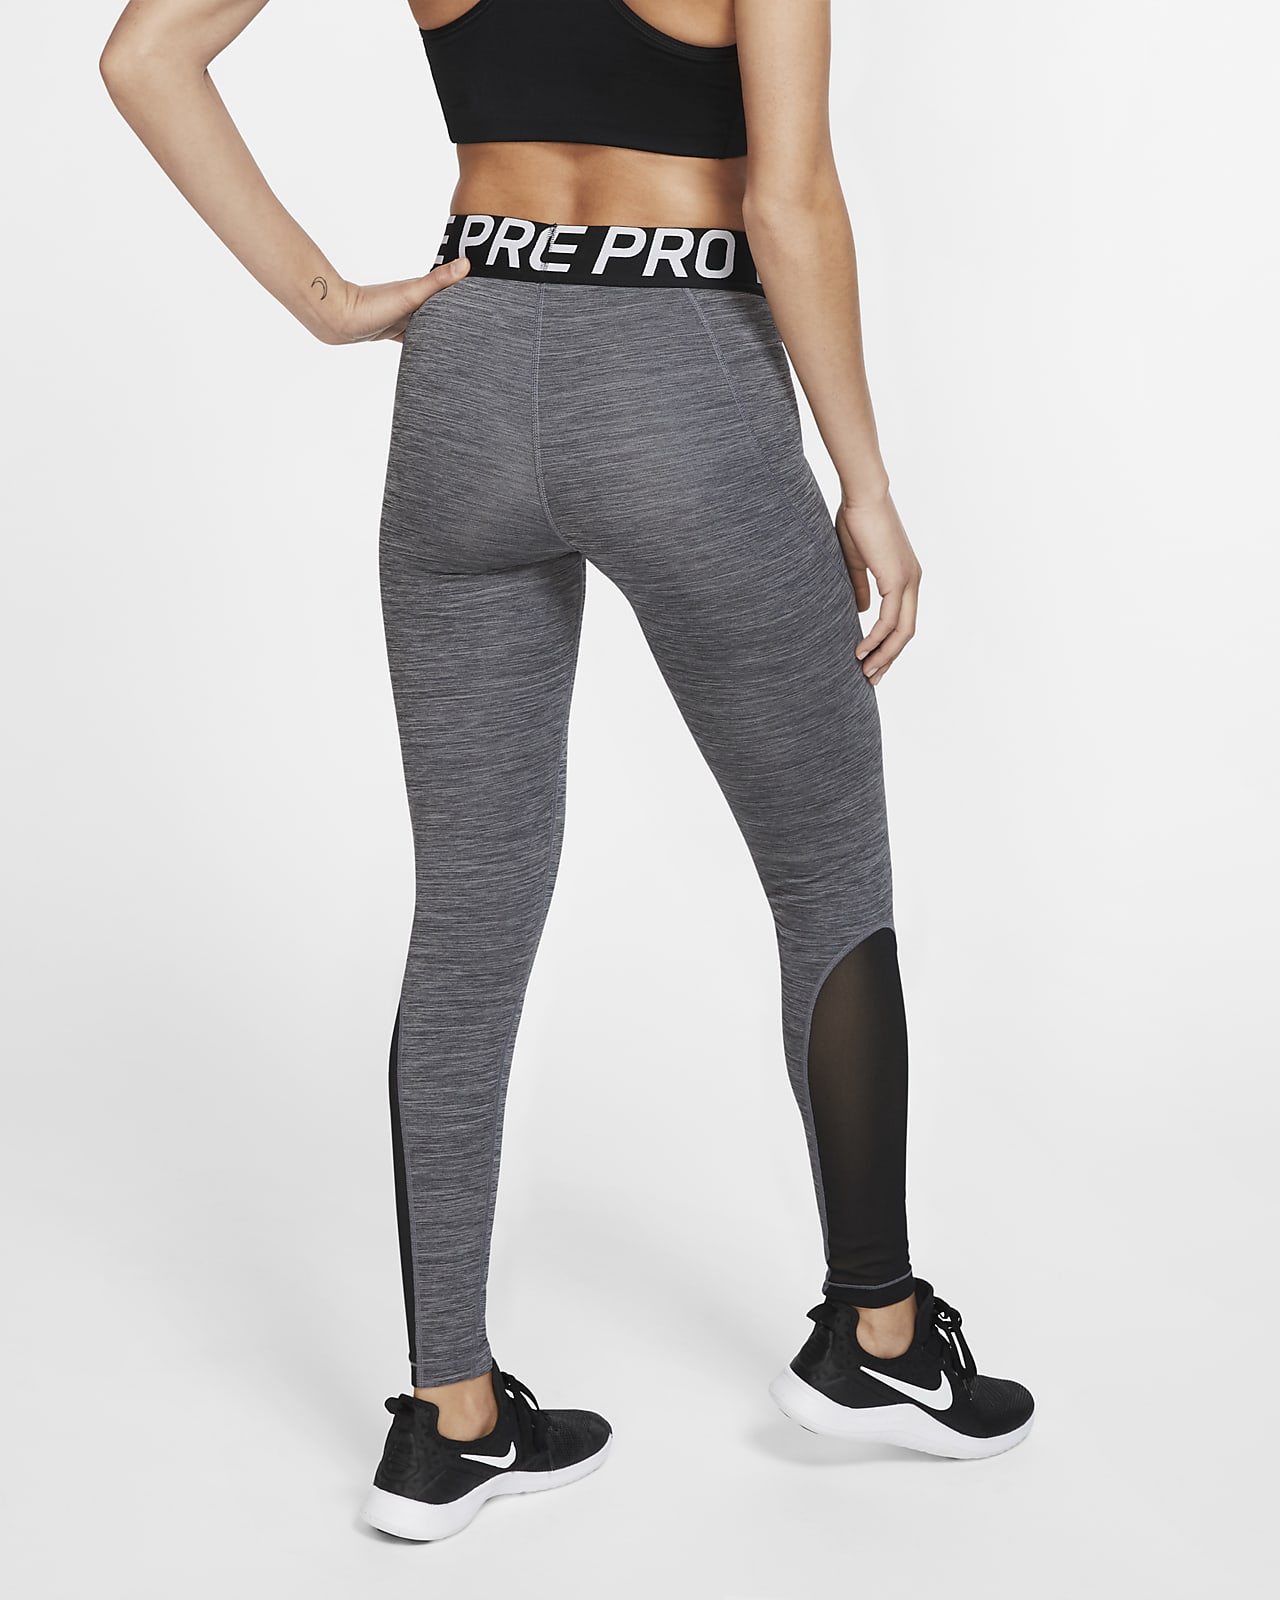 nike pro women's tights grey